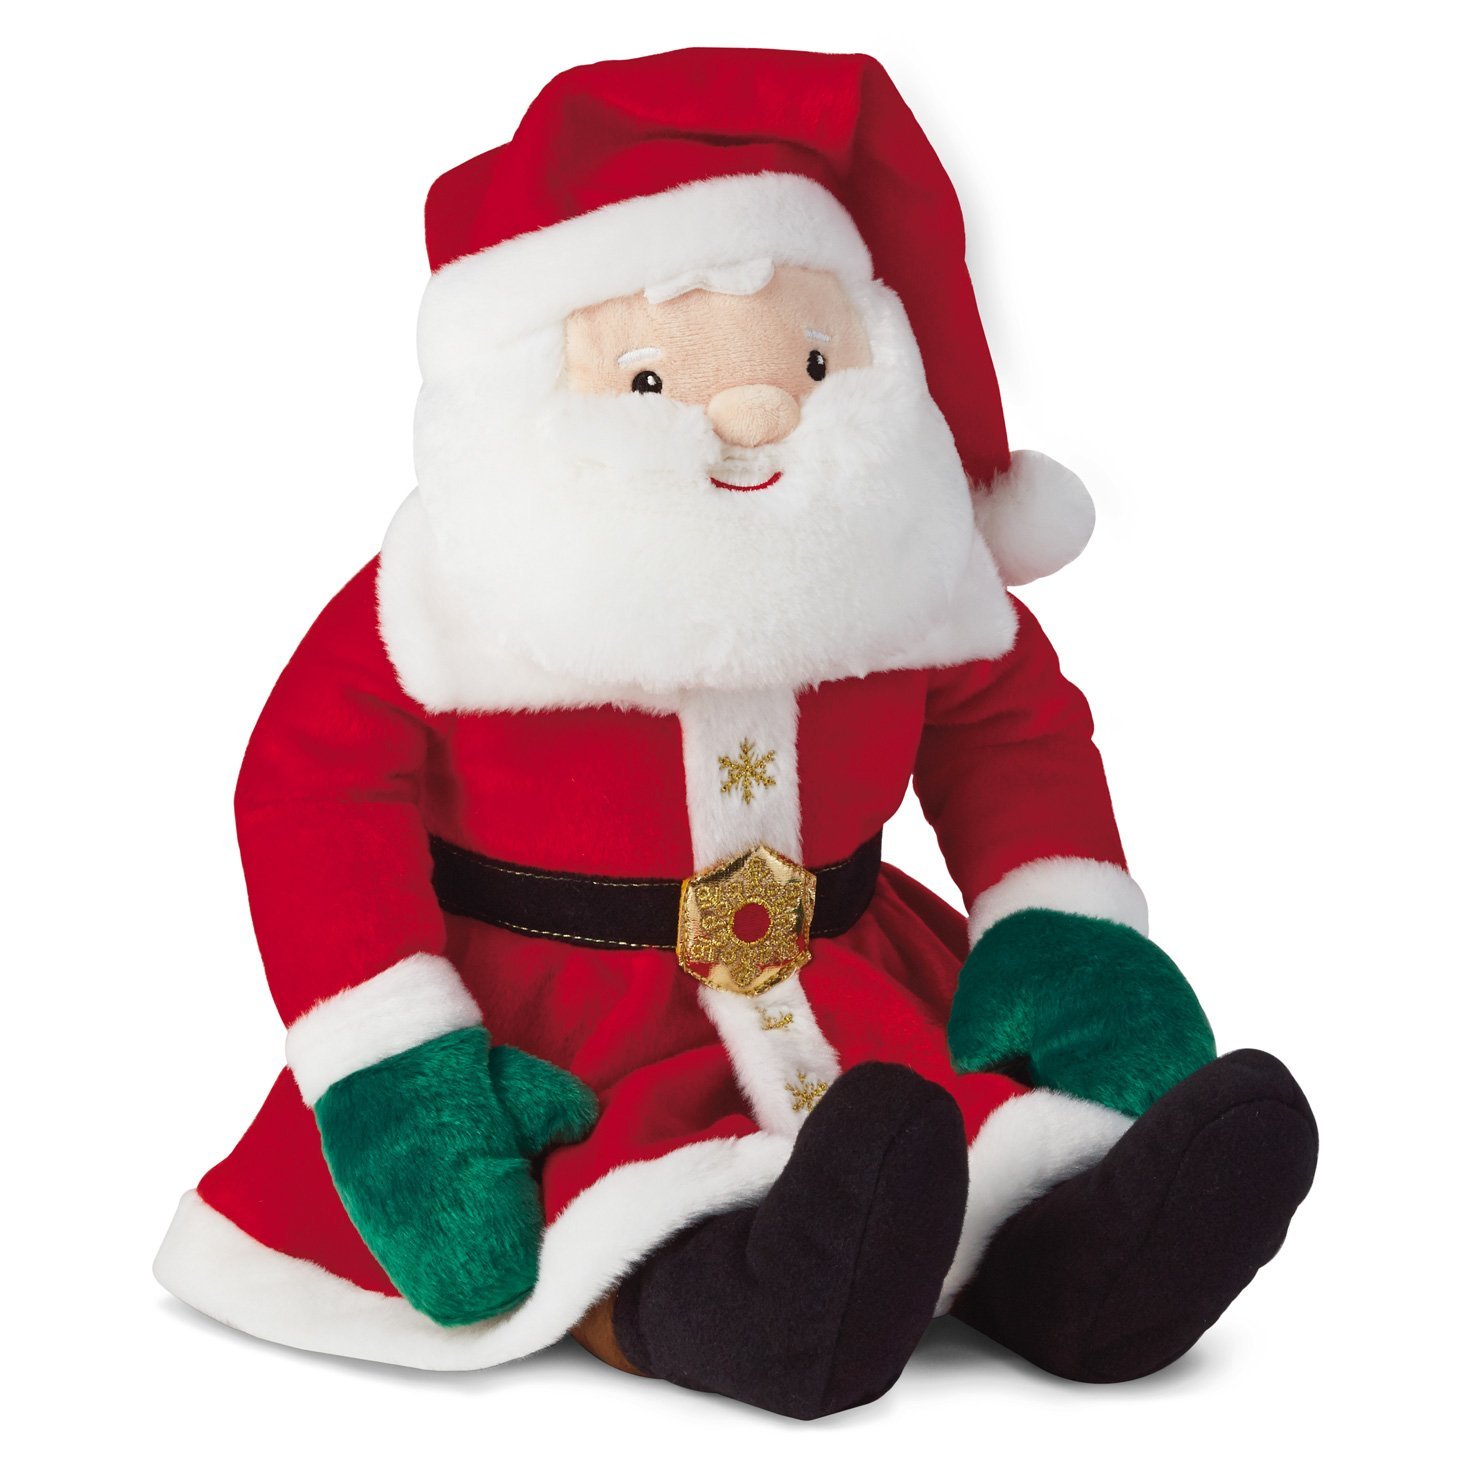 Amazon.com: Hallmark North Pole Santa Claus Plush Stuffed Toy: Home ...